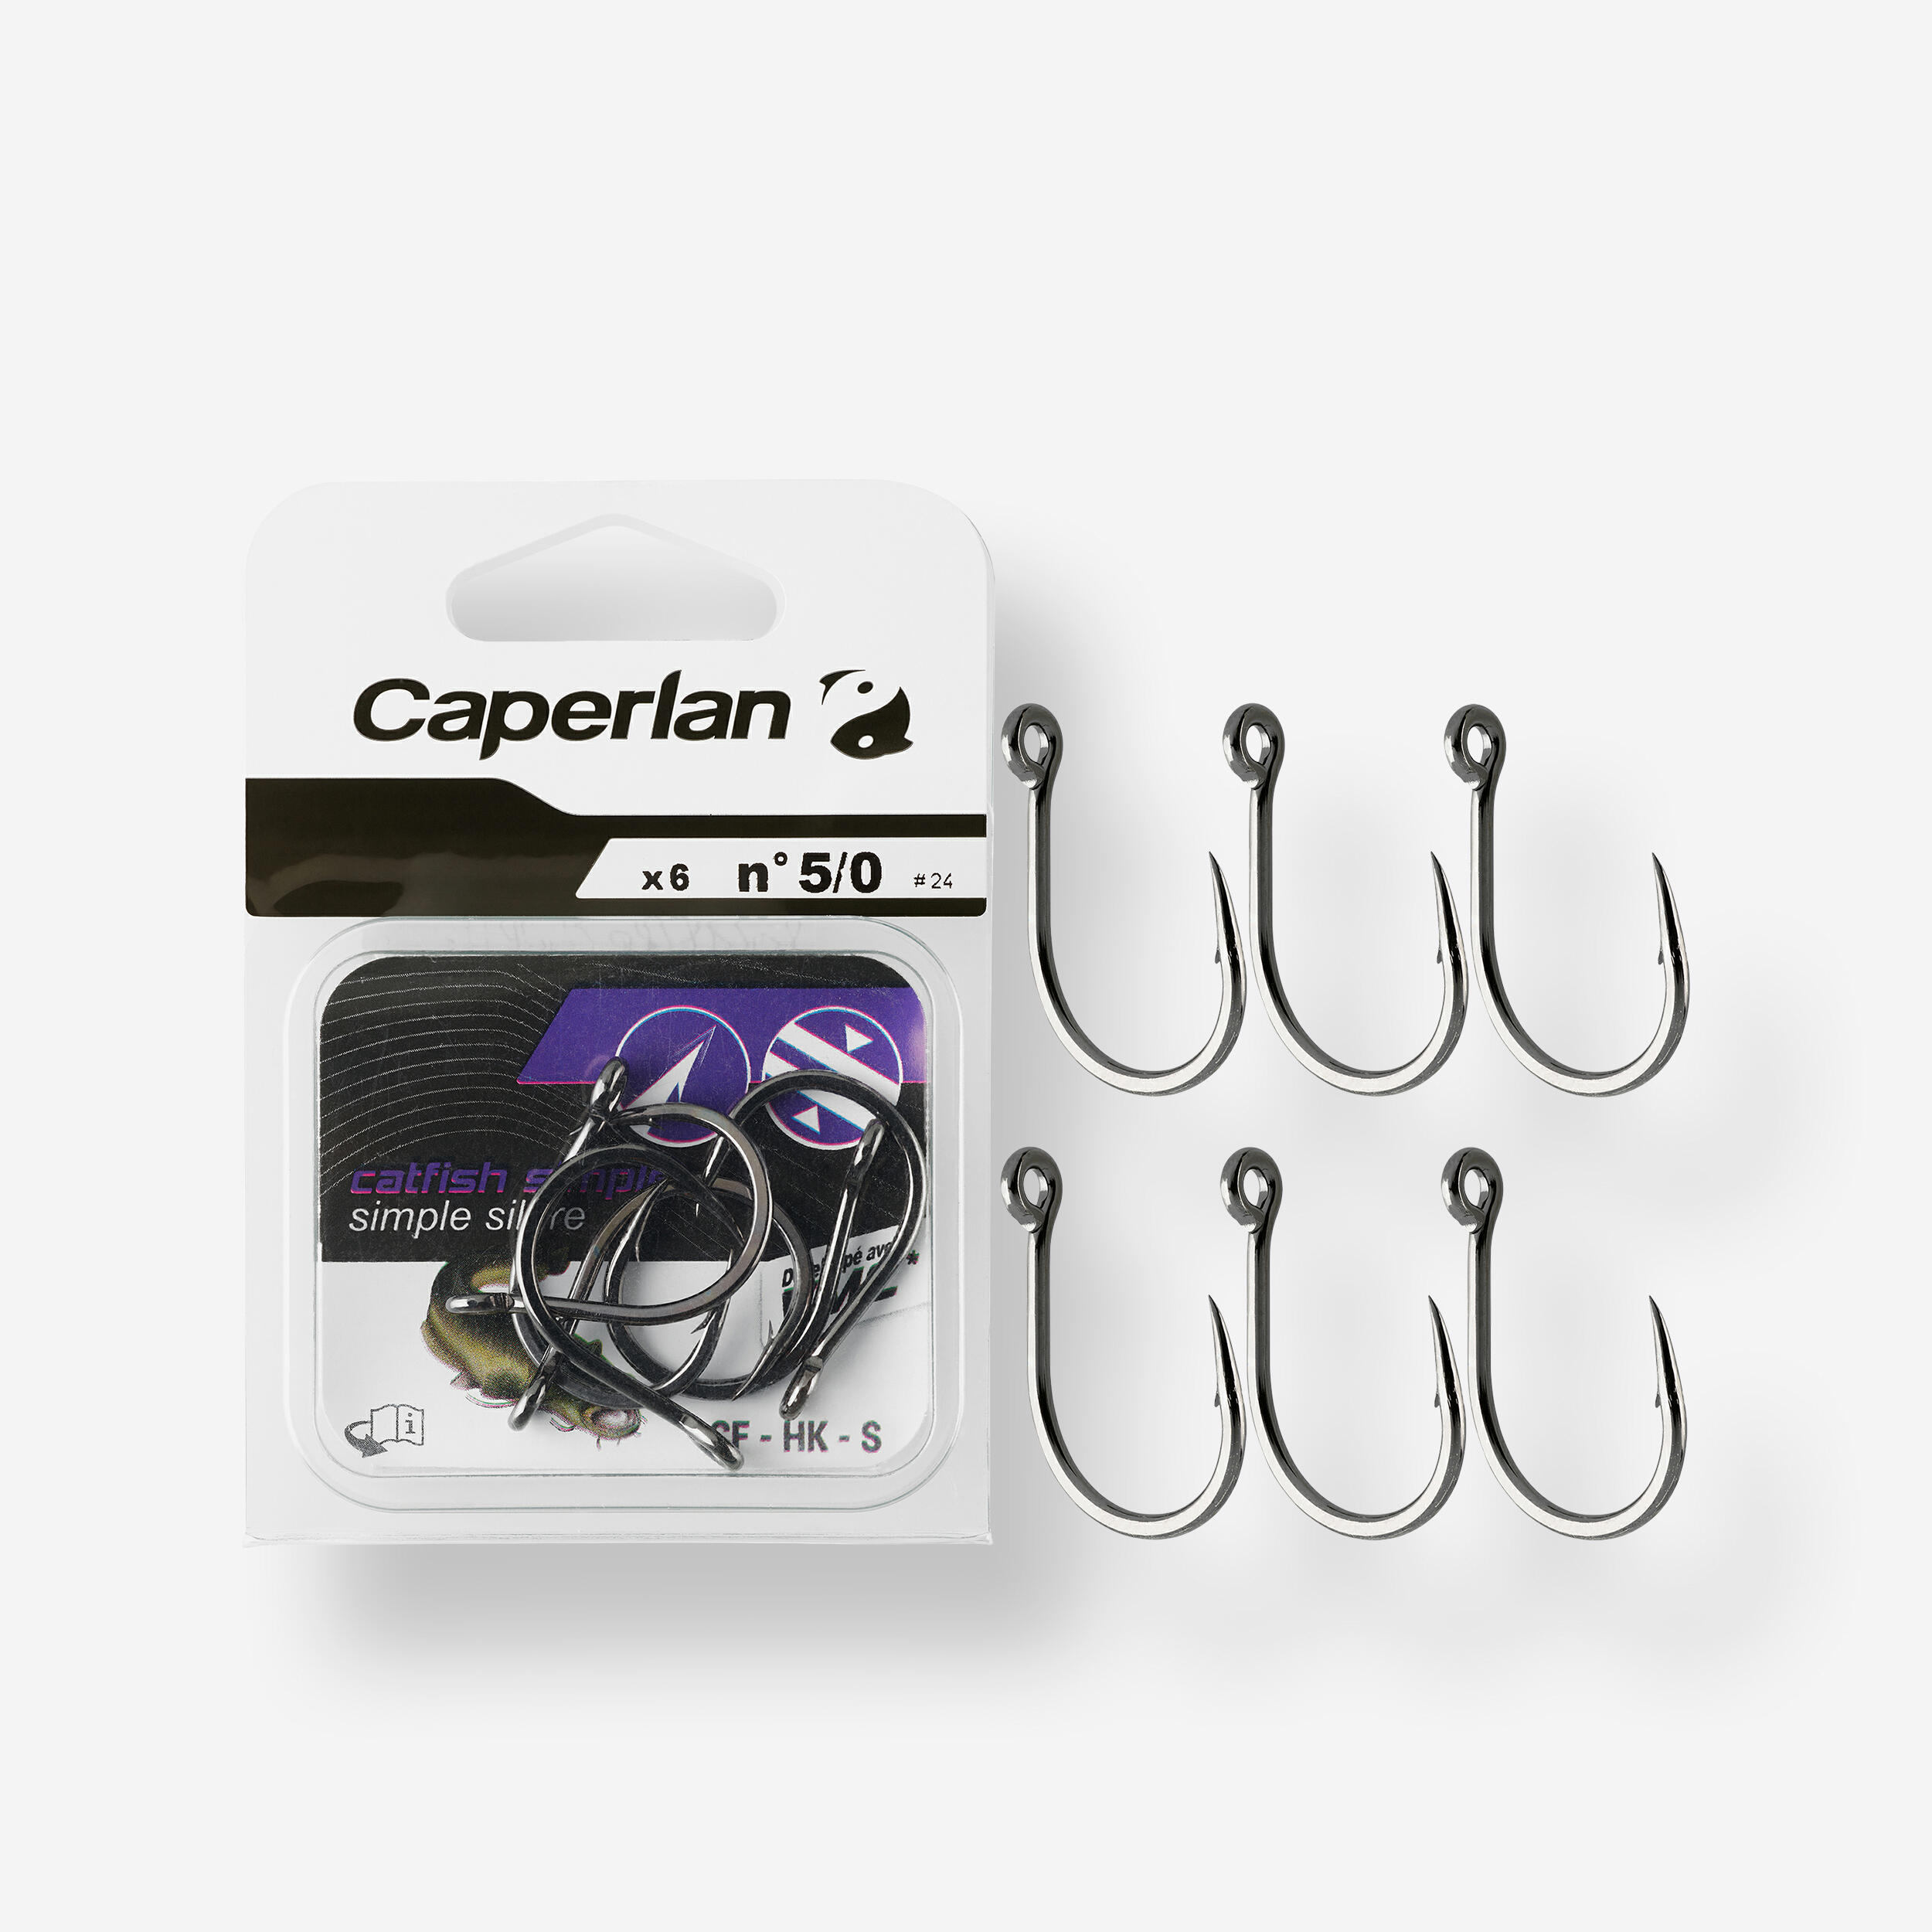 CAPERLAN CF HK S 5/0 SINGLE CATFISH FISHING HOOK